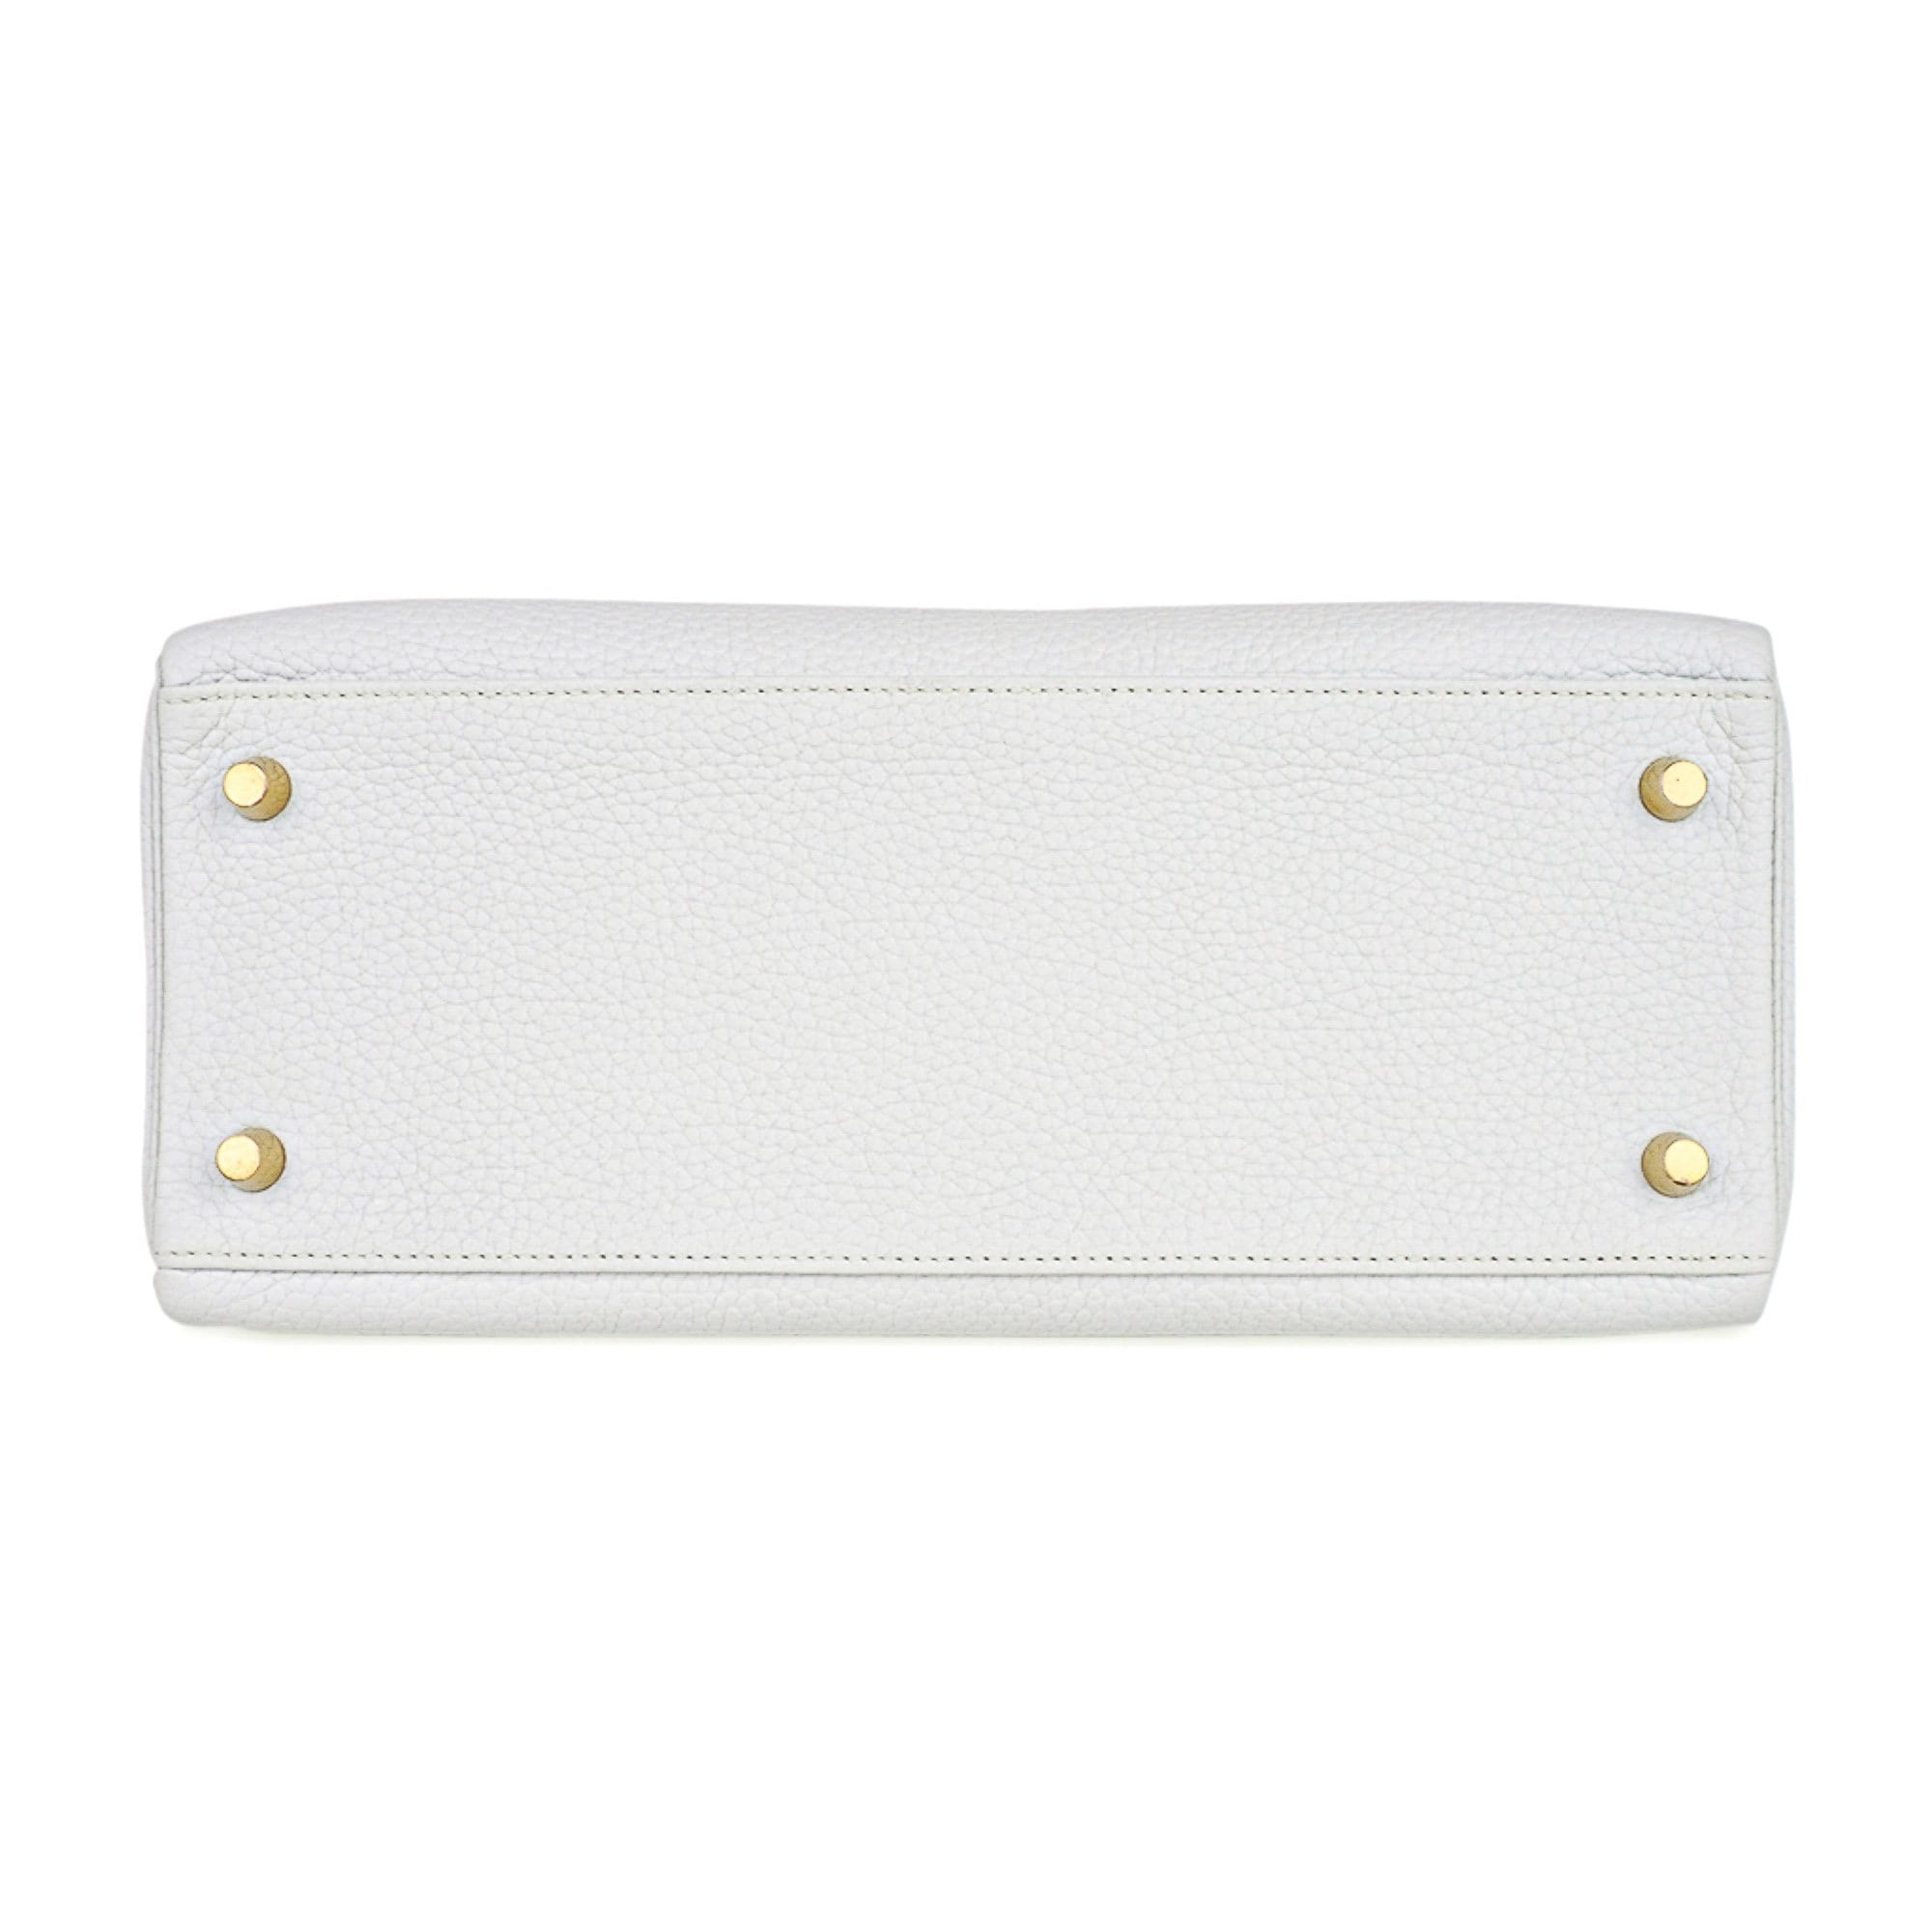 White Hermès Kelly 35cm handbag